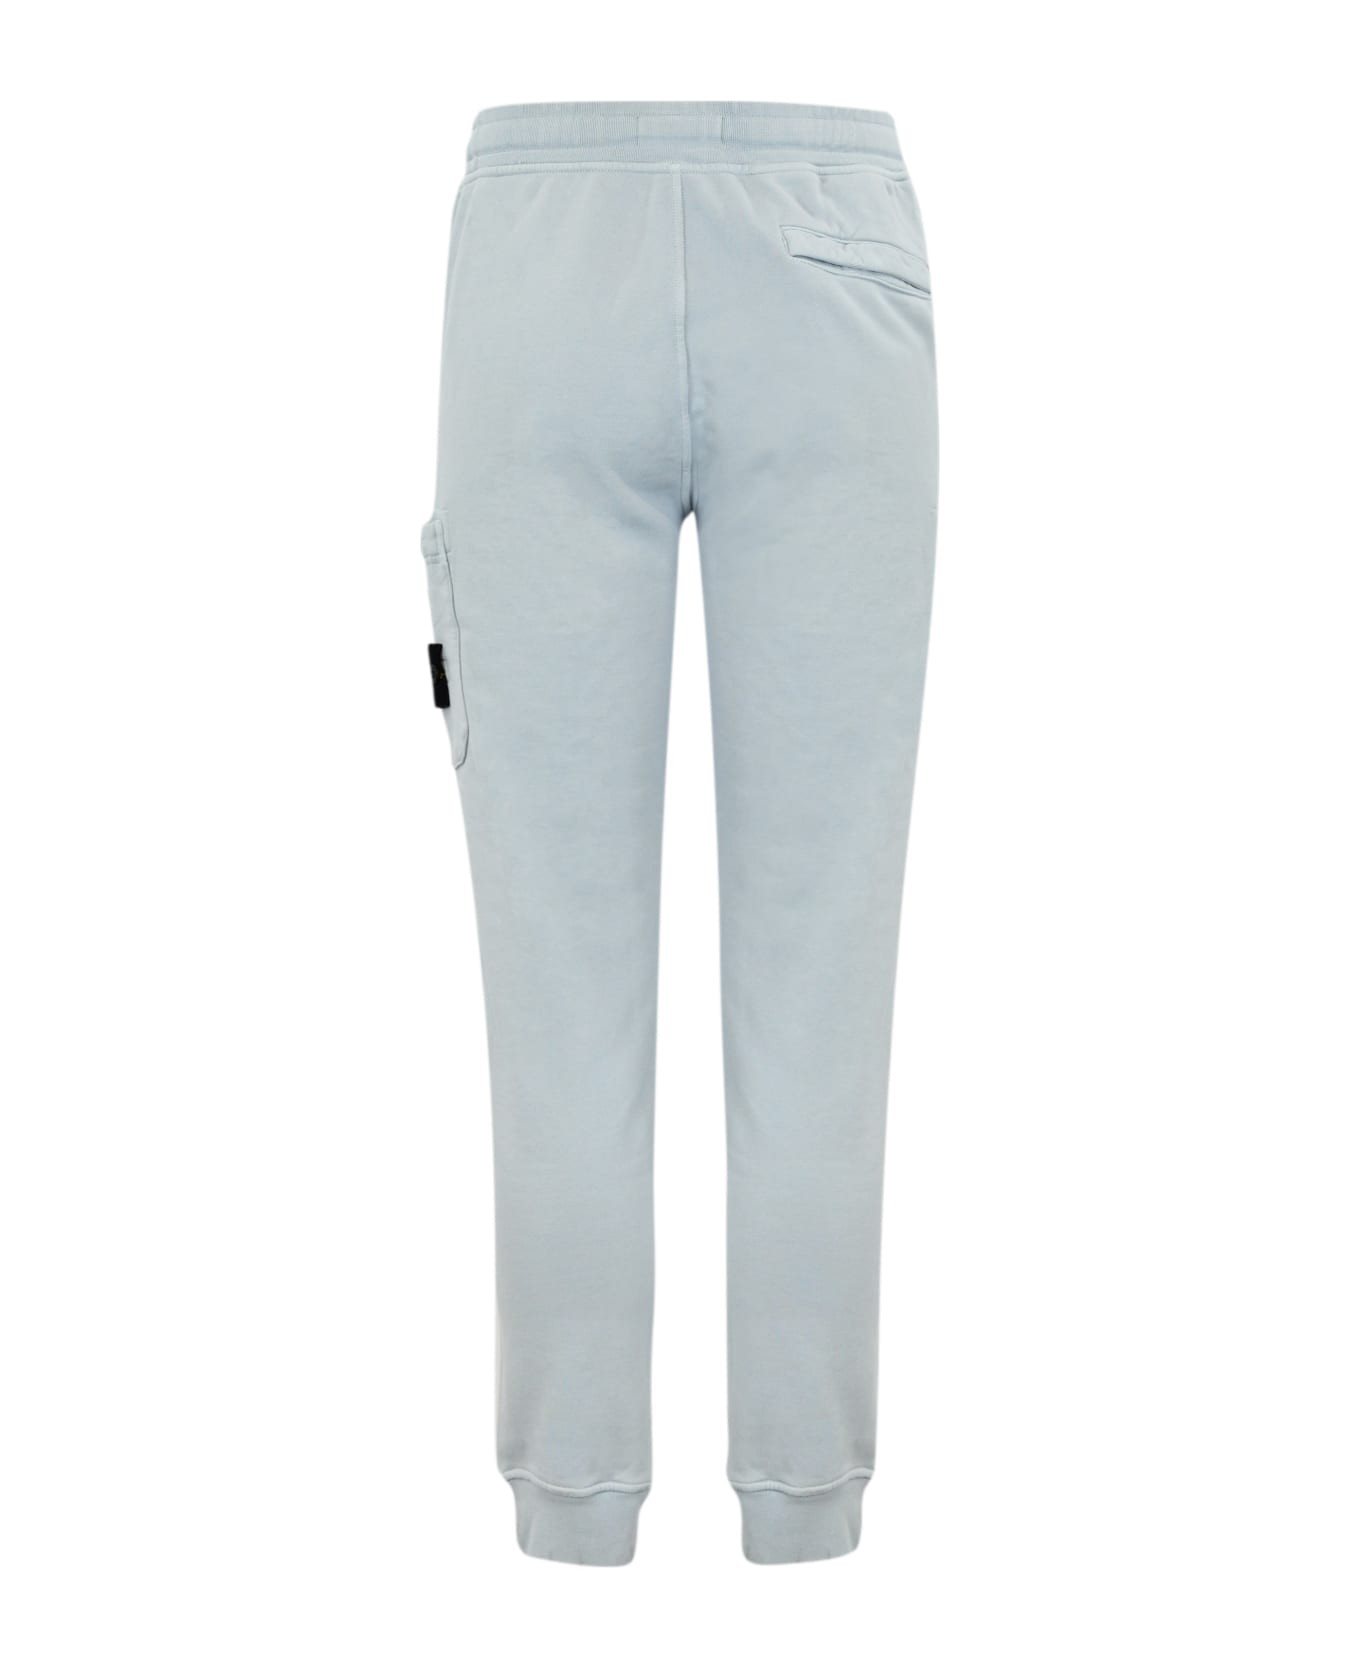 Stone Island Sports Trousers - Sky blue スウェットパンツ